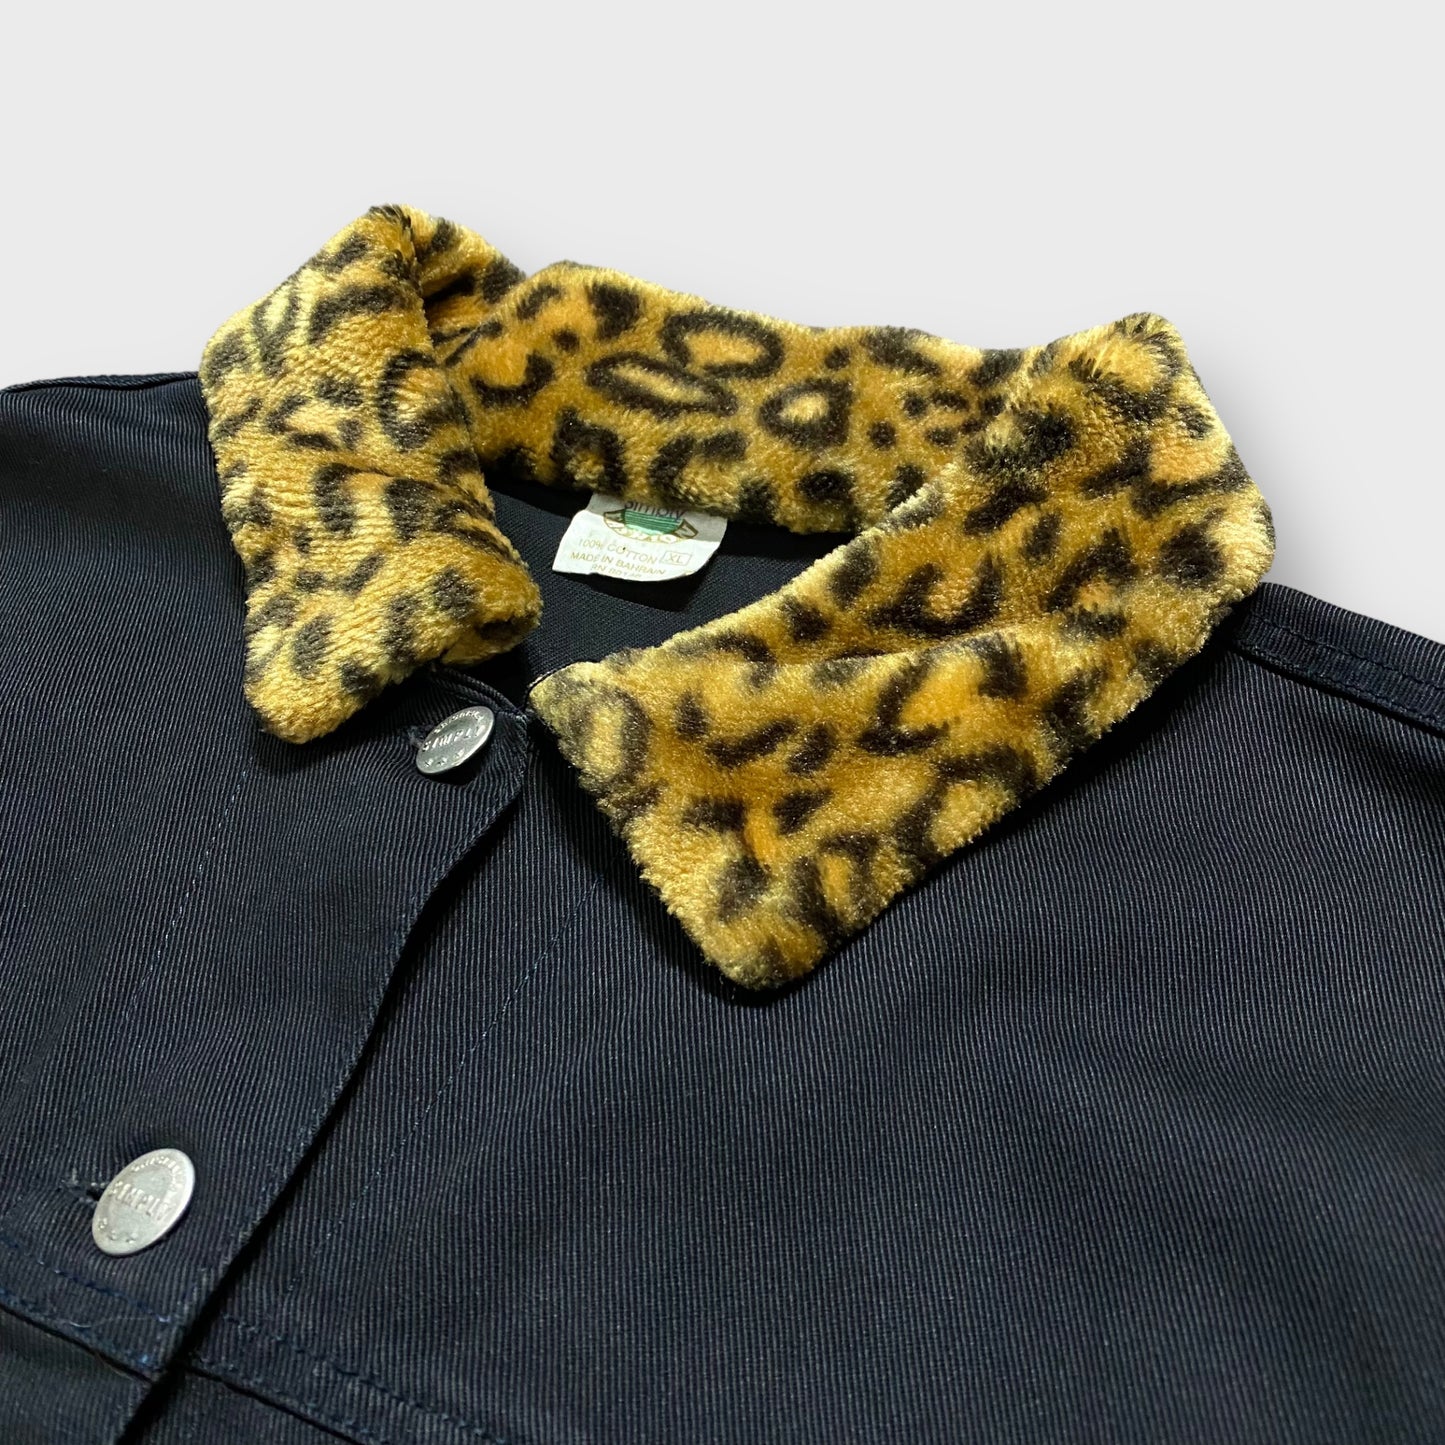 Leopard collar black denim jacket